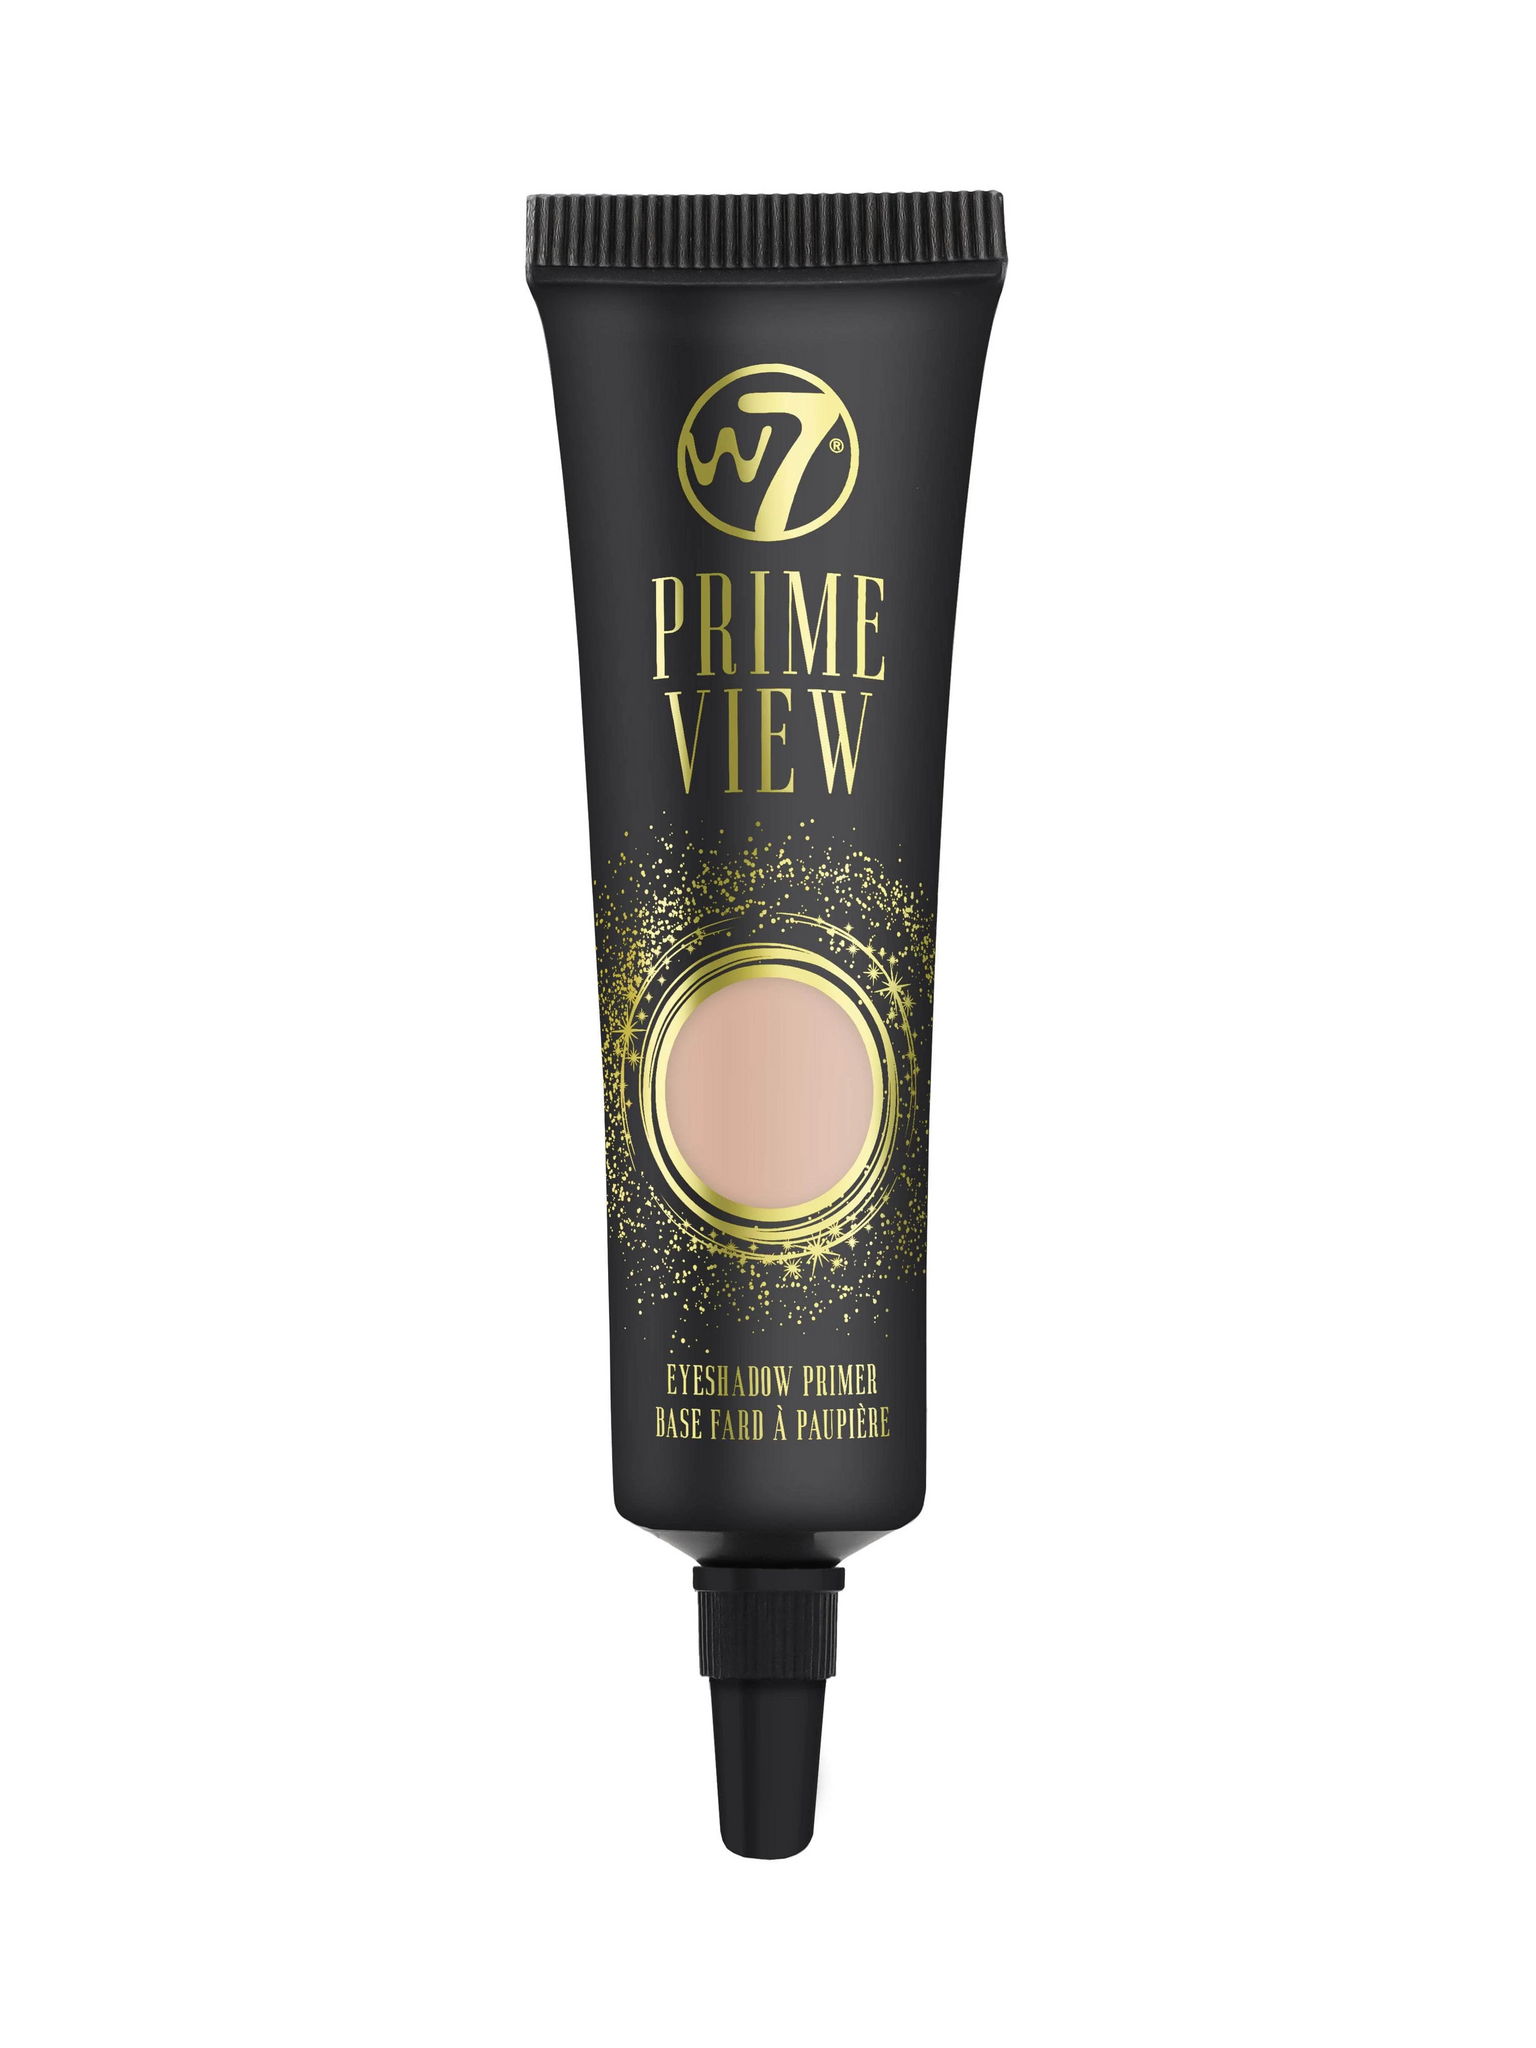 W7 Prime View Eyeshadow Primer